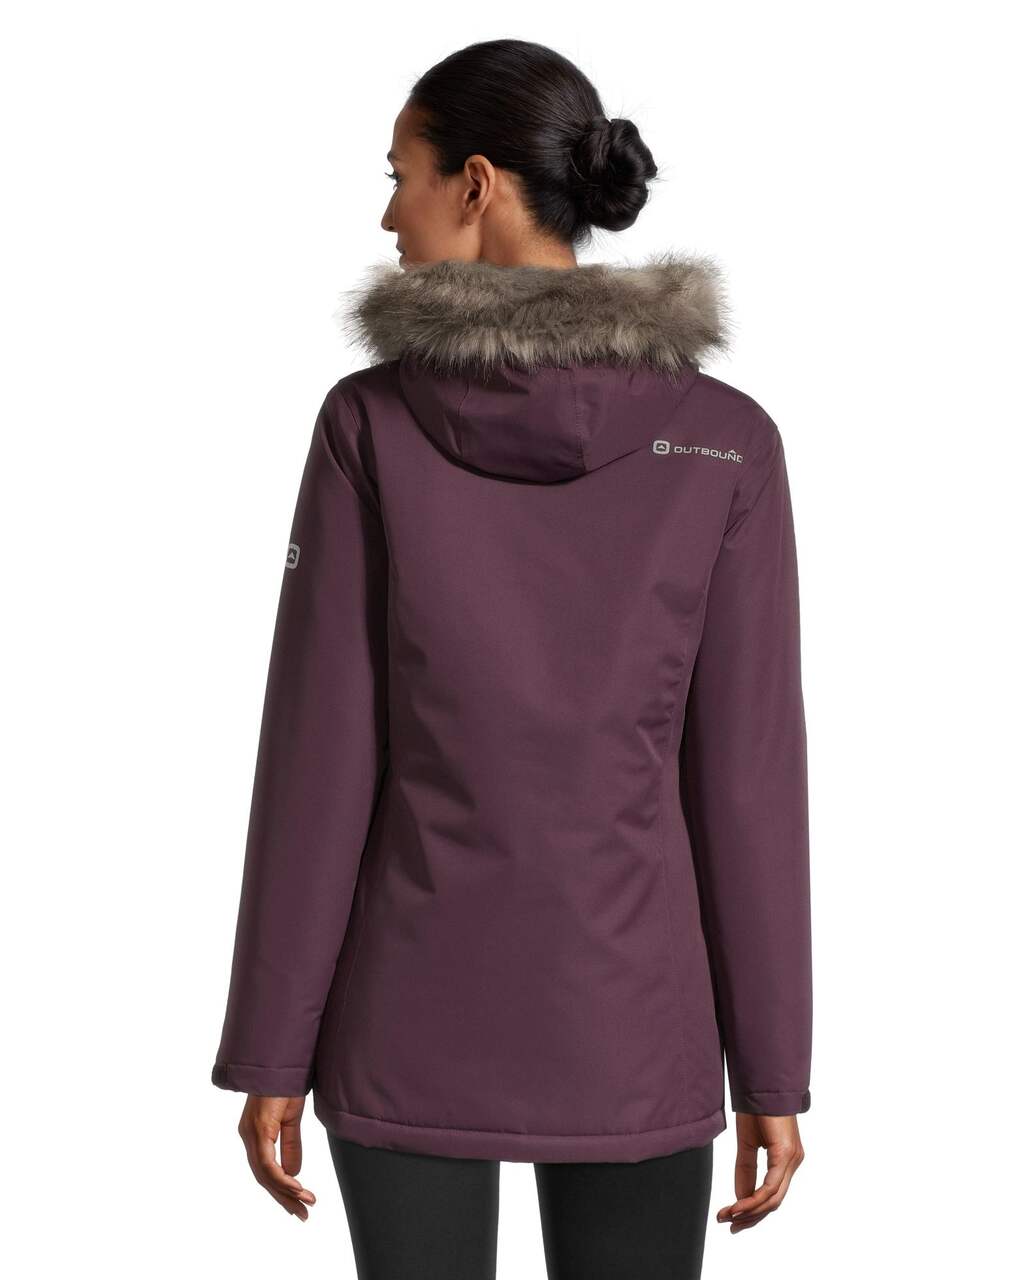 Outbound Women's Ramble Insulated Waterproof Winter Parka Jacket Faux Fur  Trim Hood, Plum